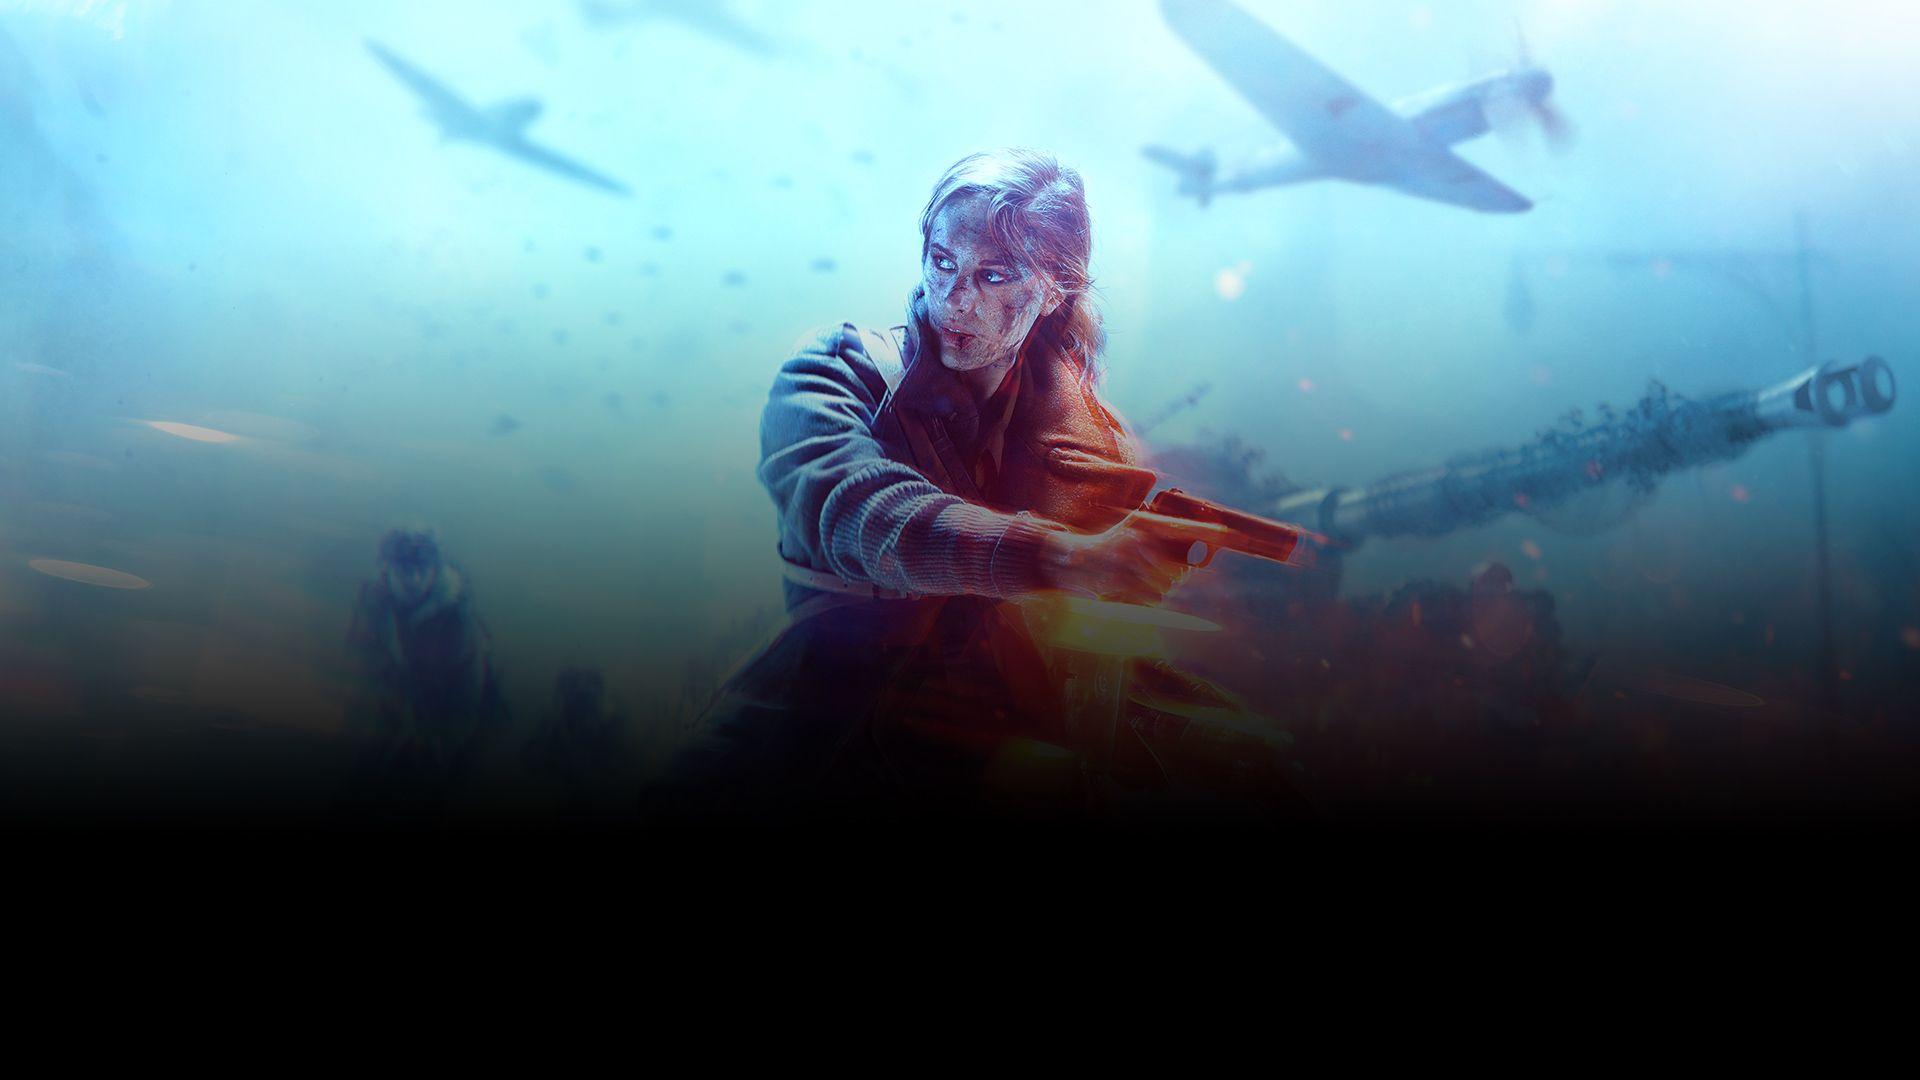 Battlefield V Warrior Girl, HD Games, 4k Wallpaper, Image